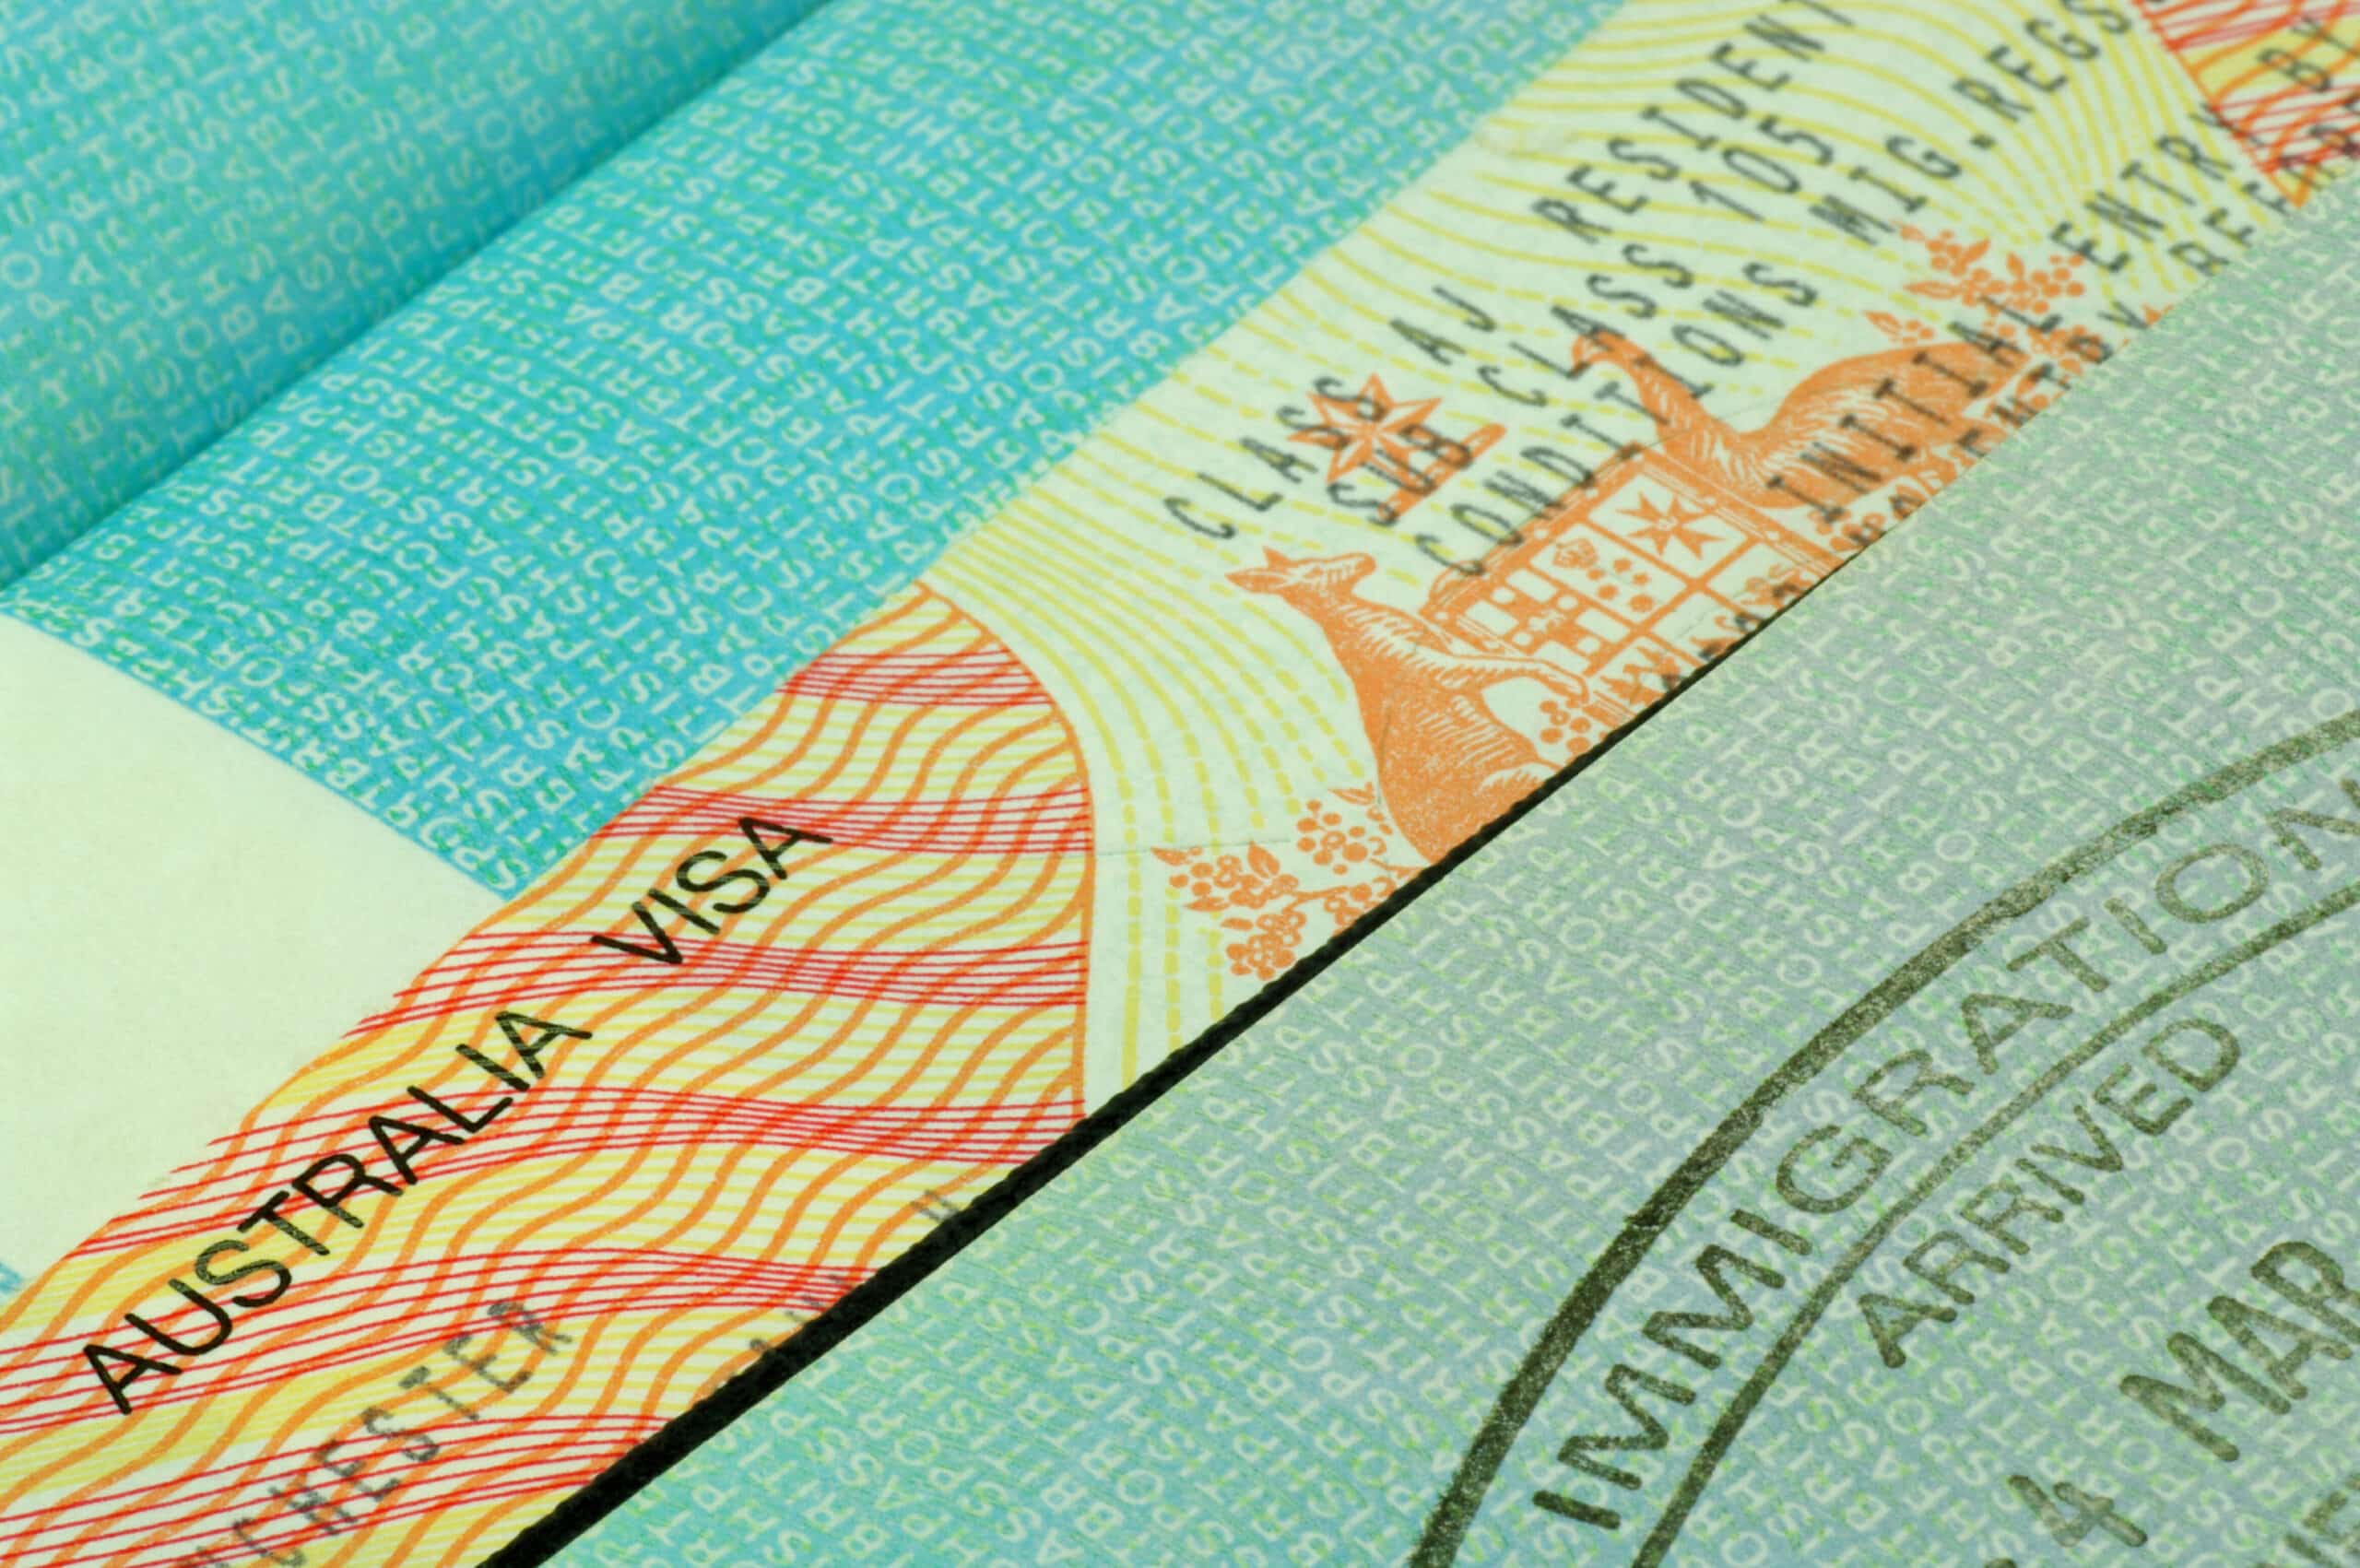 australian visa and passport page